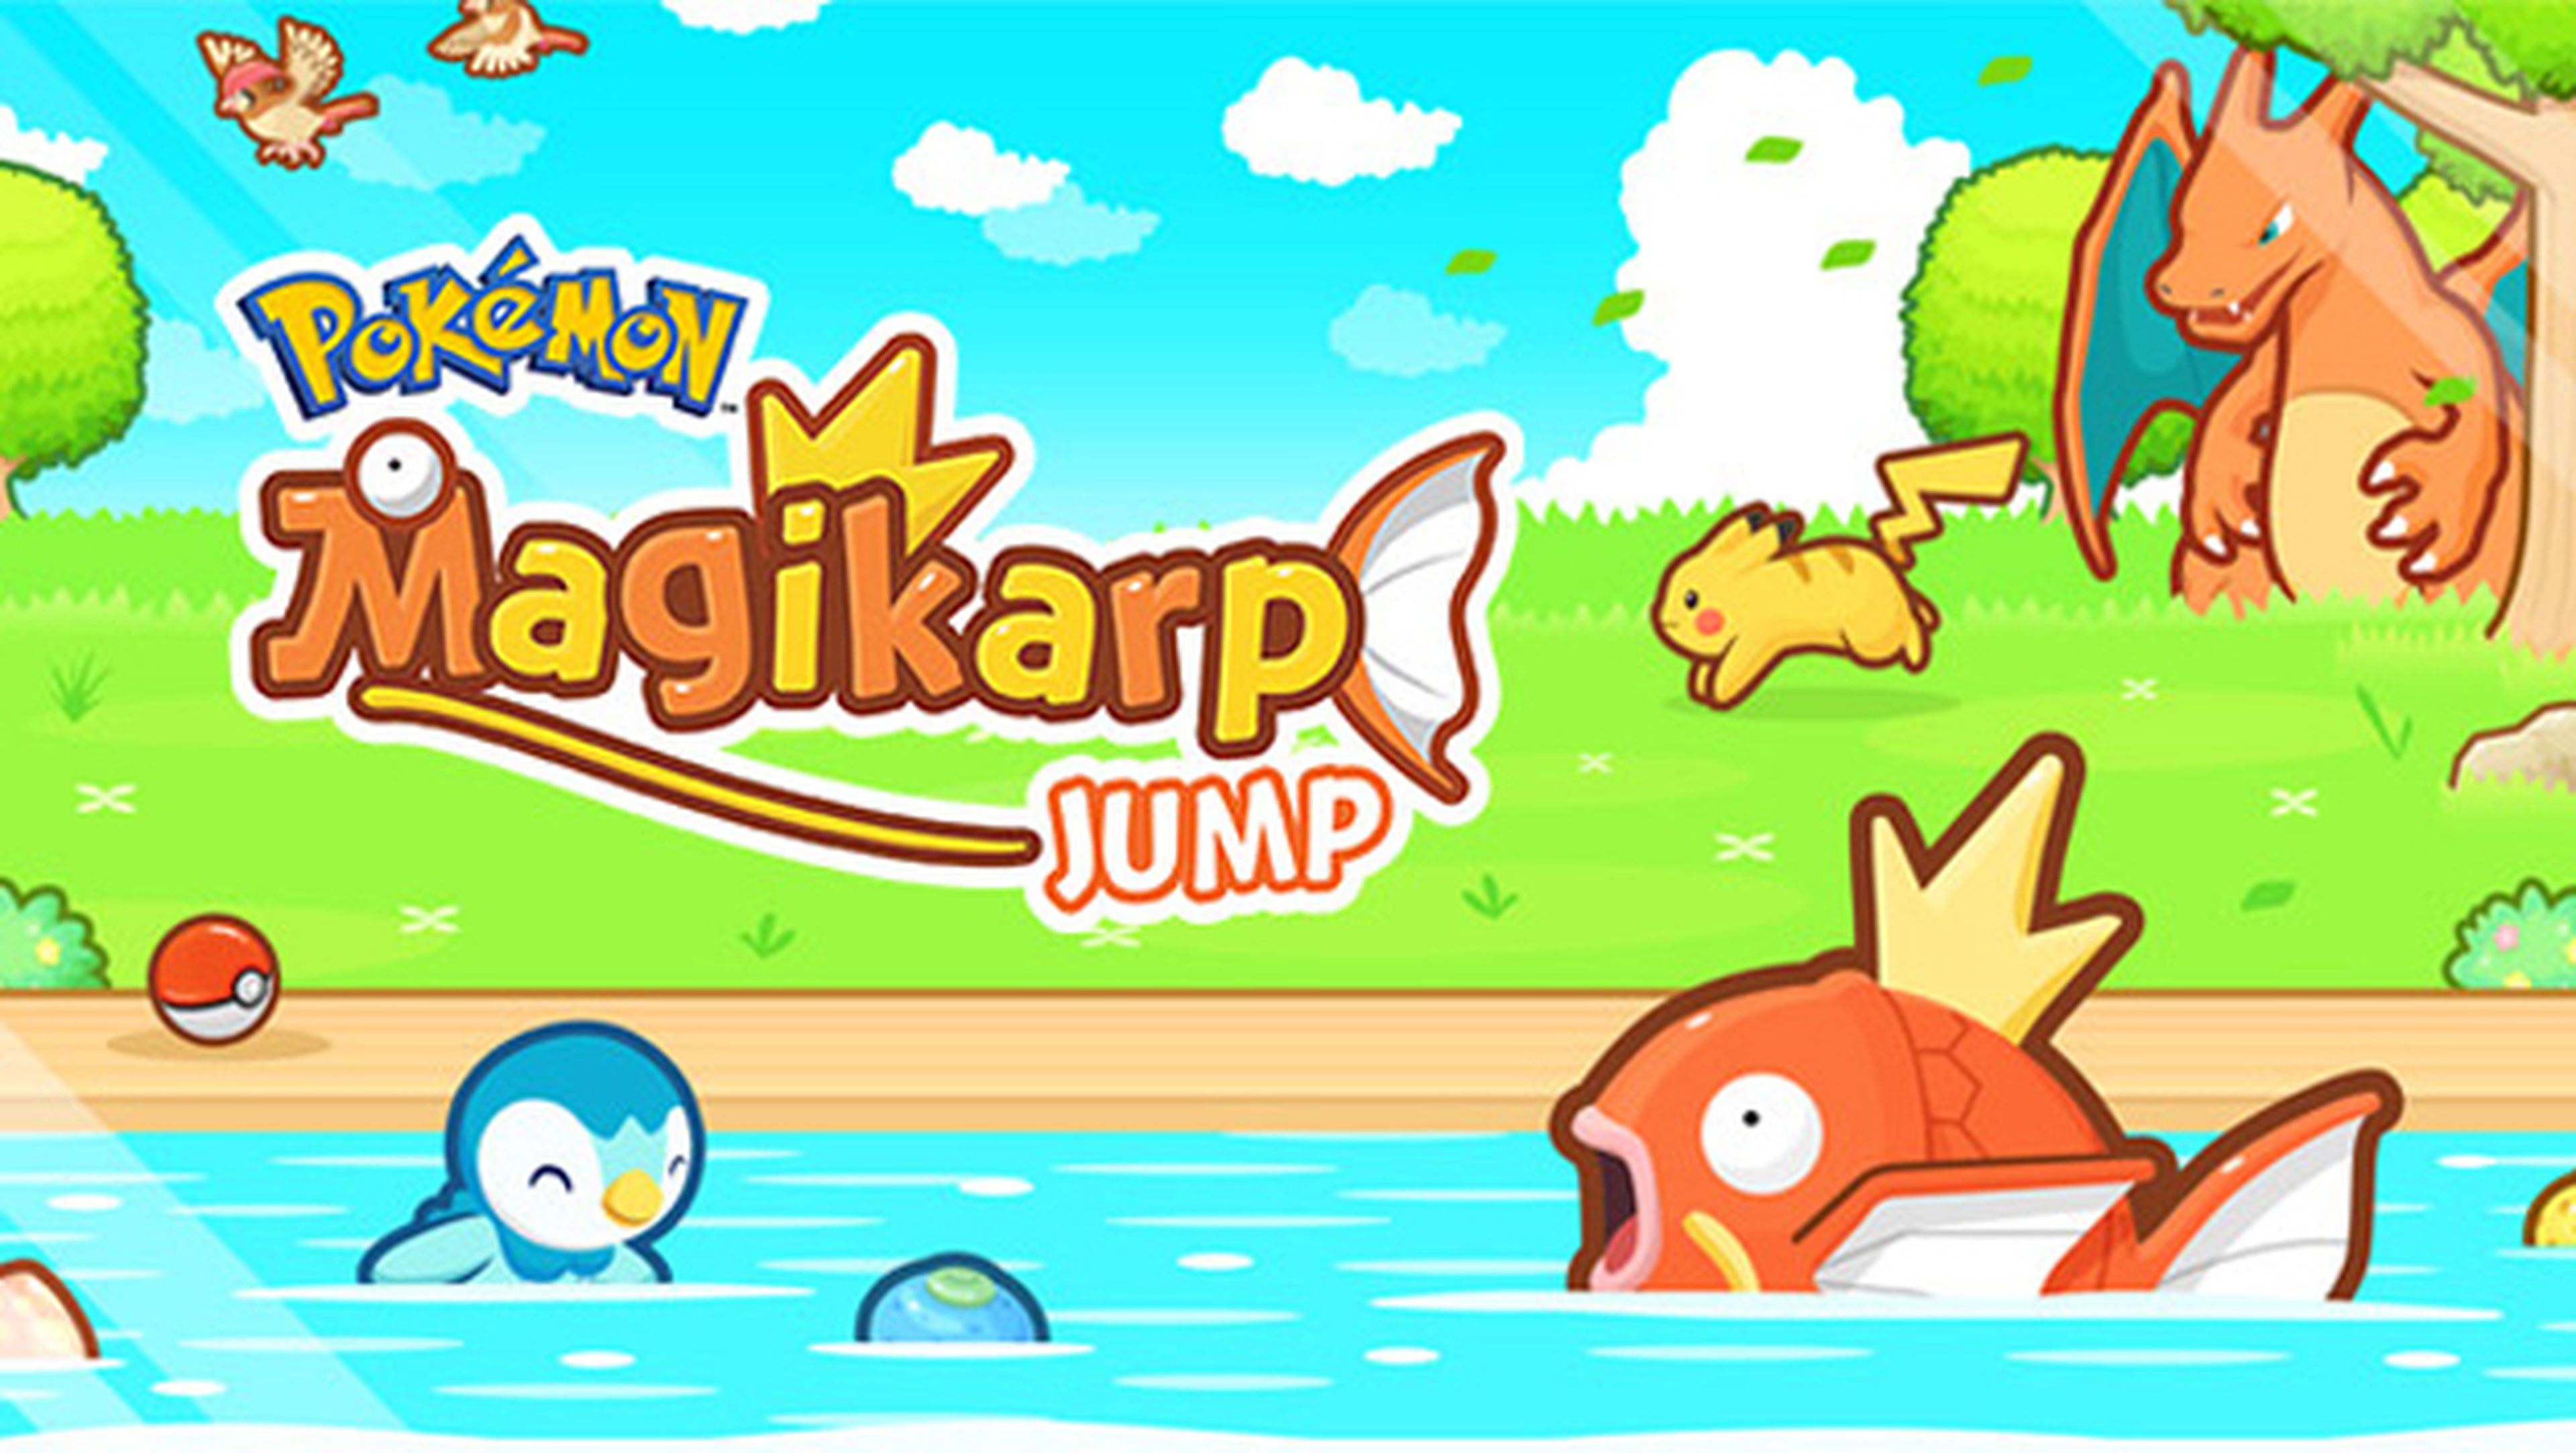 Pokémon Magikarp Jump